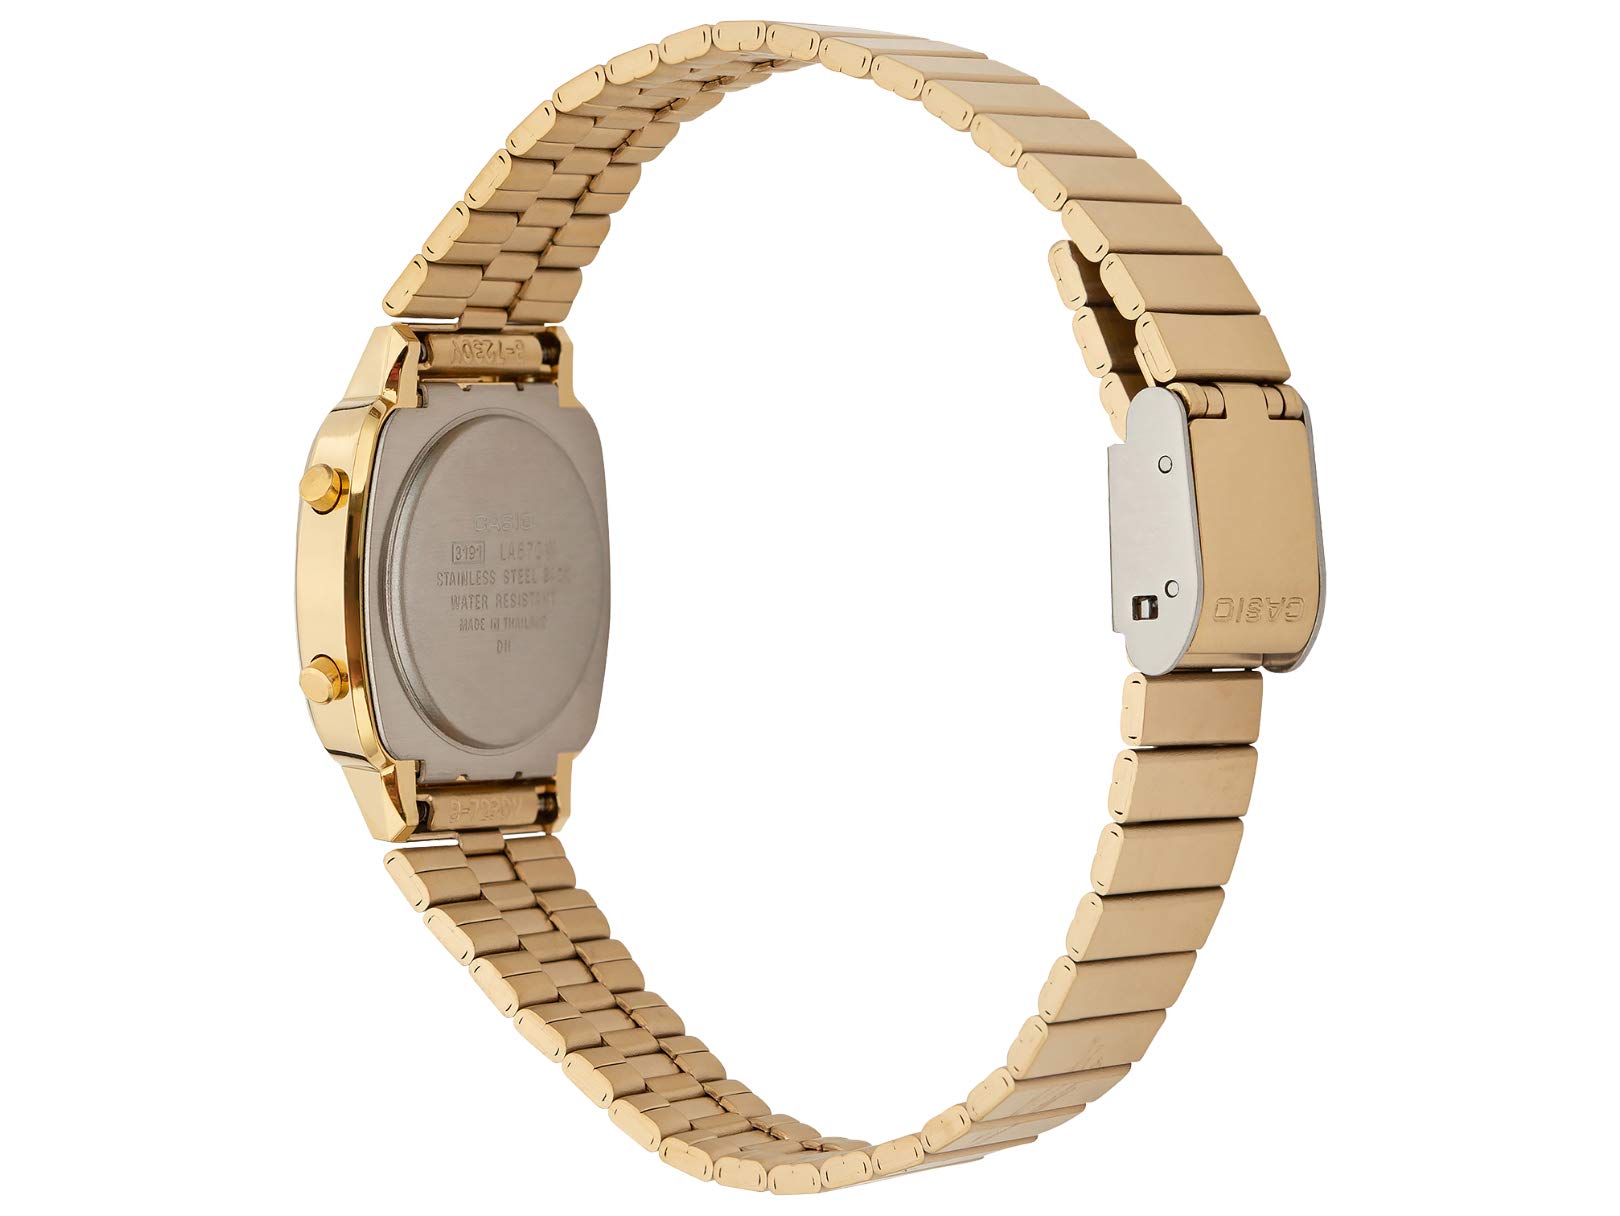 Casio Women's LA670WGA-9 Gold Stainless-Steel Quartz Watch with Digital Dial